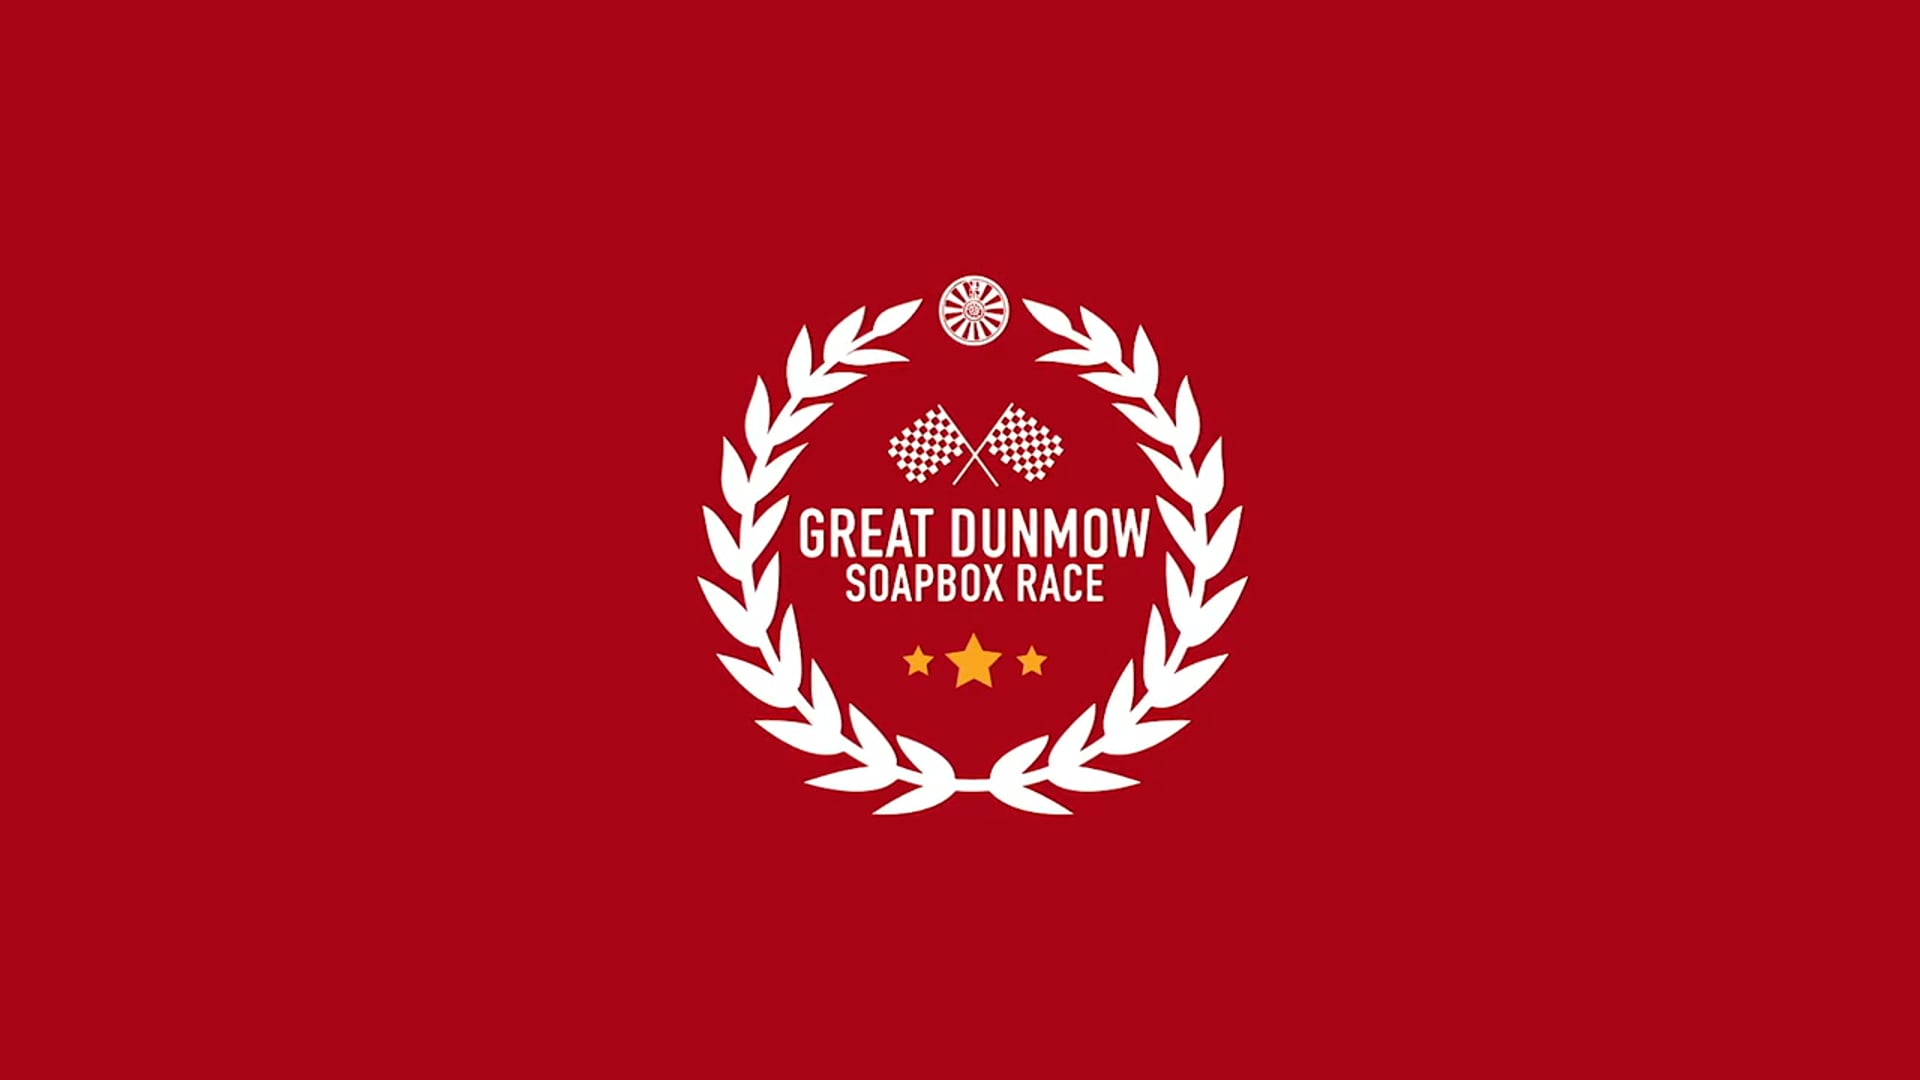 Great Dunmow Soapbox Race